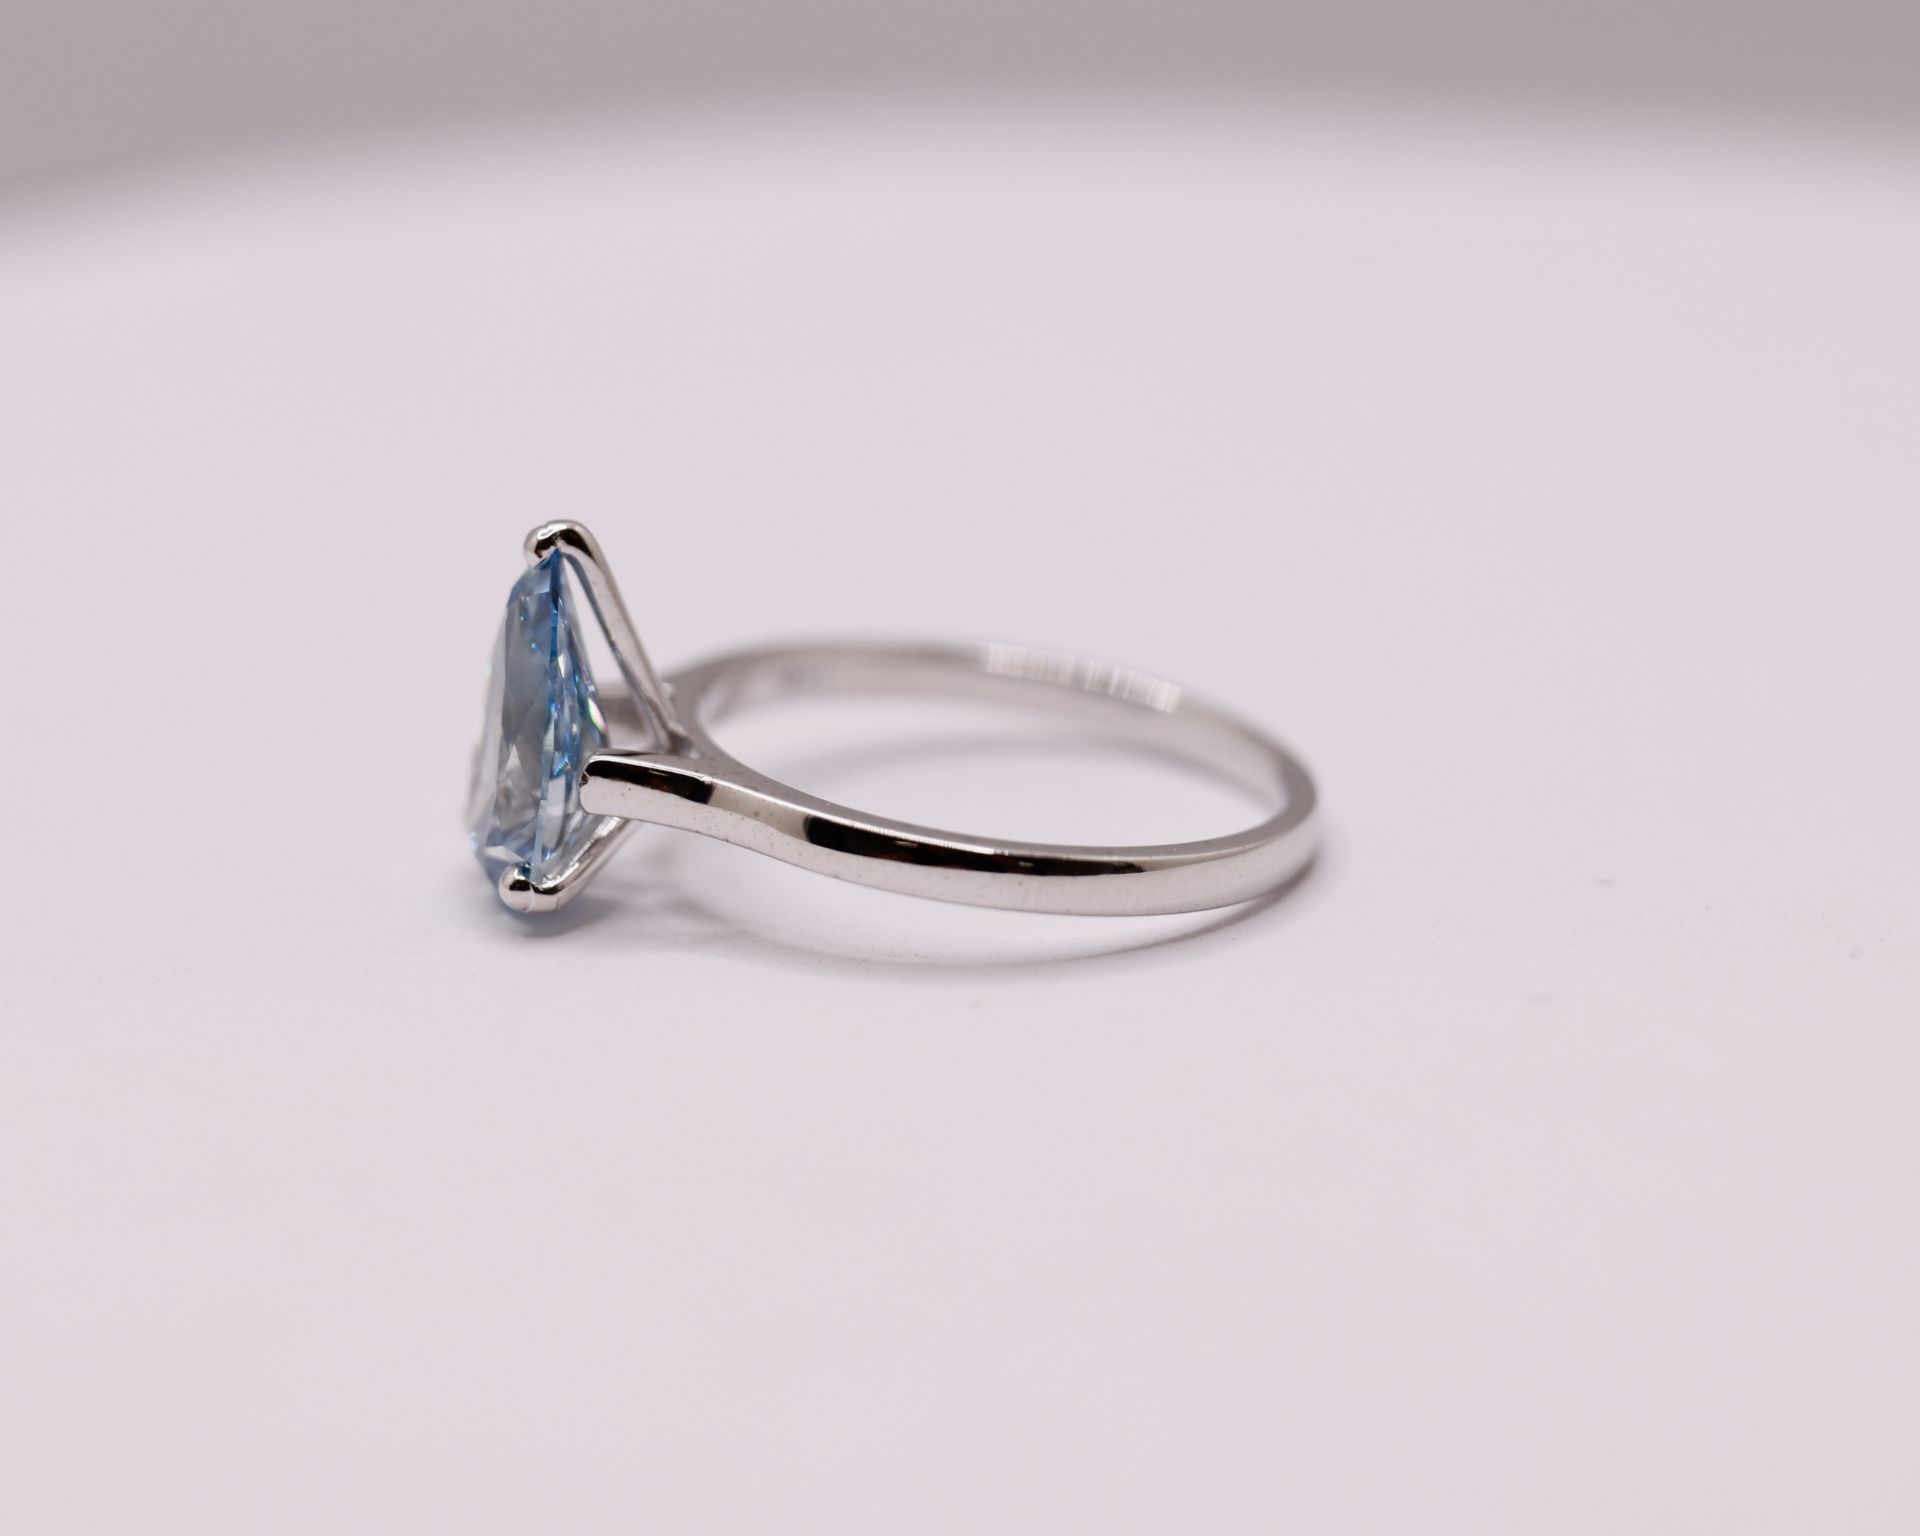 ** ON SALE ** Fancy Blue Pear Cut 1.60 Carat Diamond 18Kt White Gold Ring - VS1 - Image 3 of 6